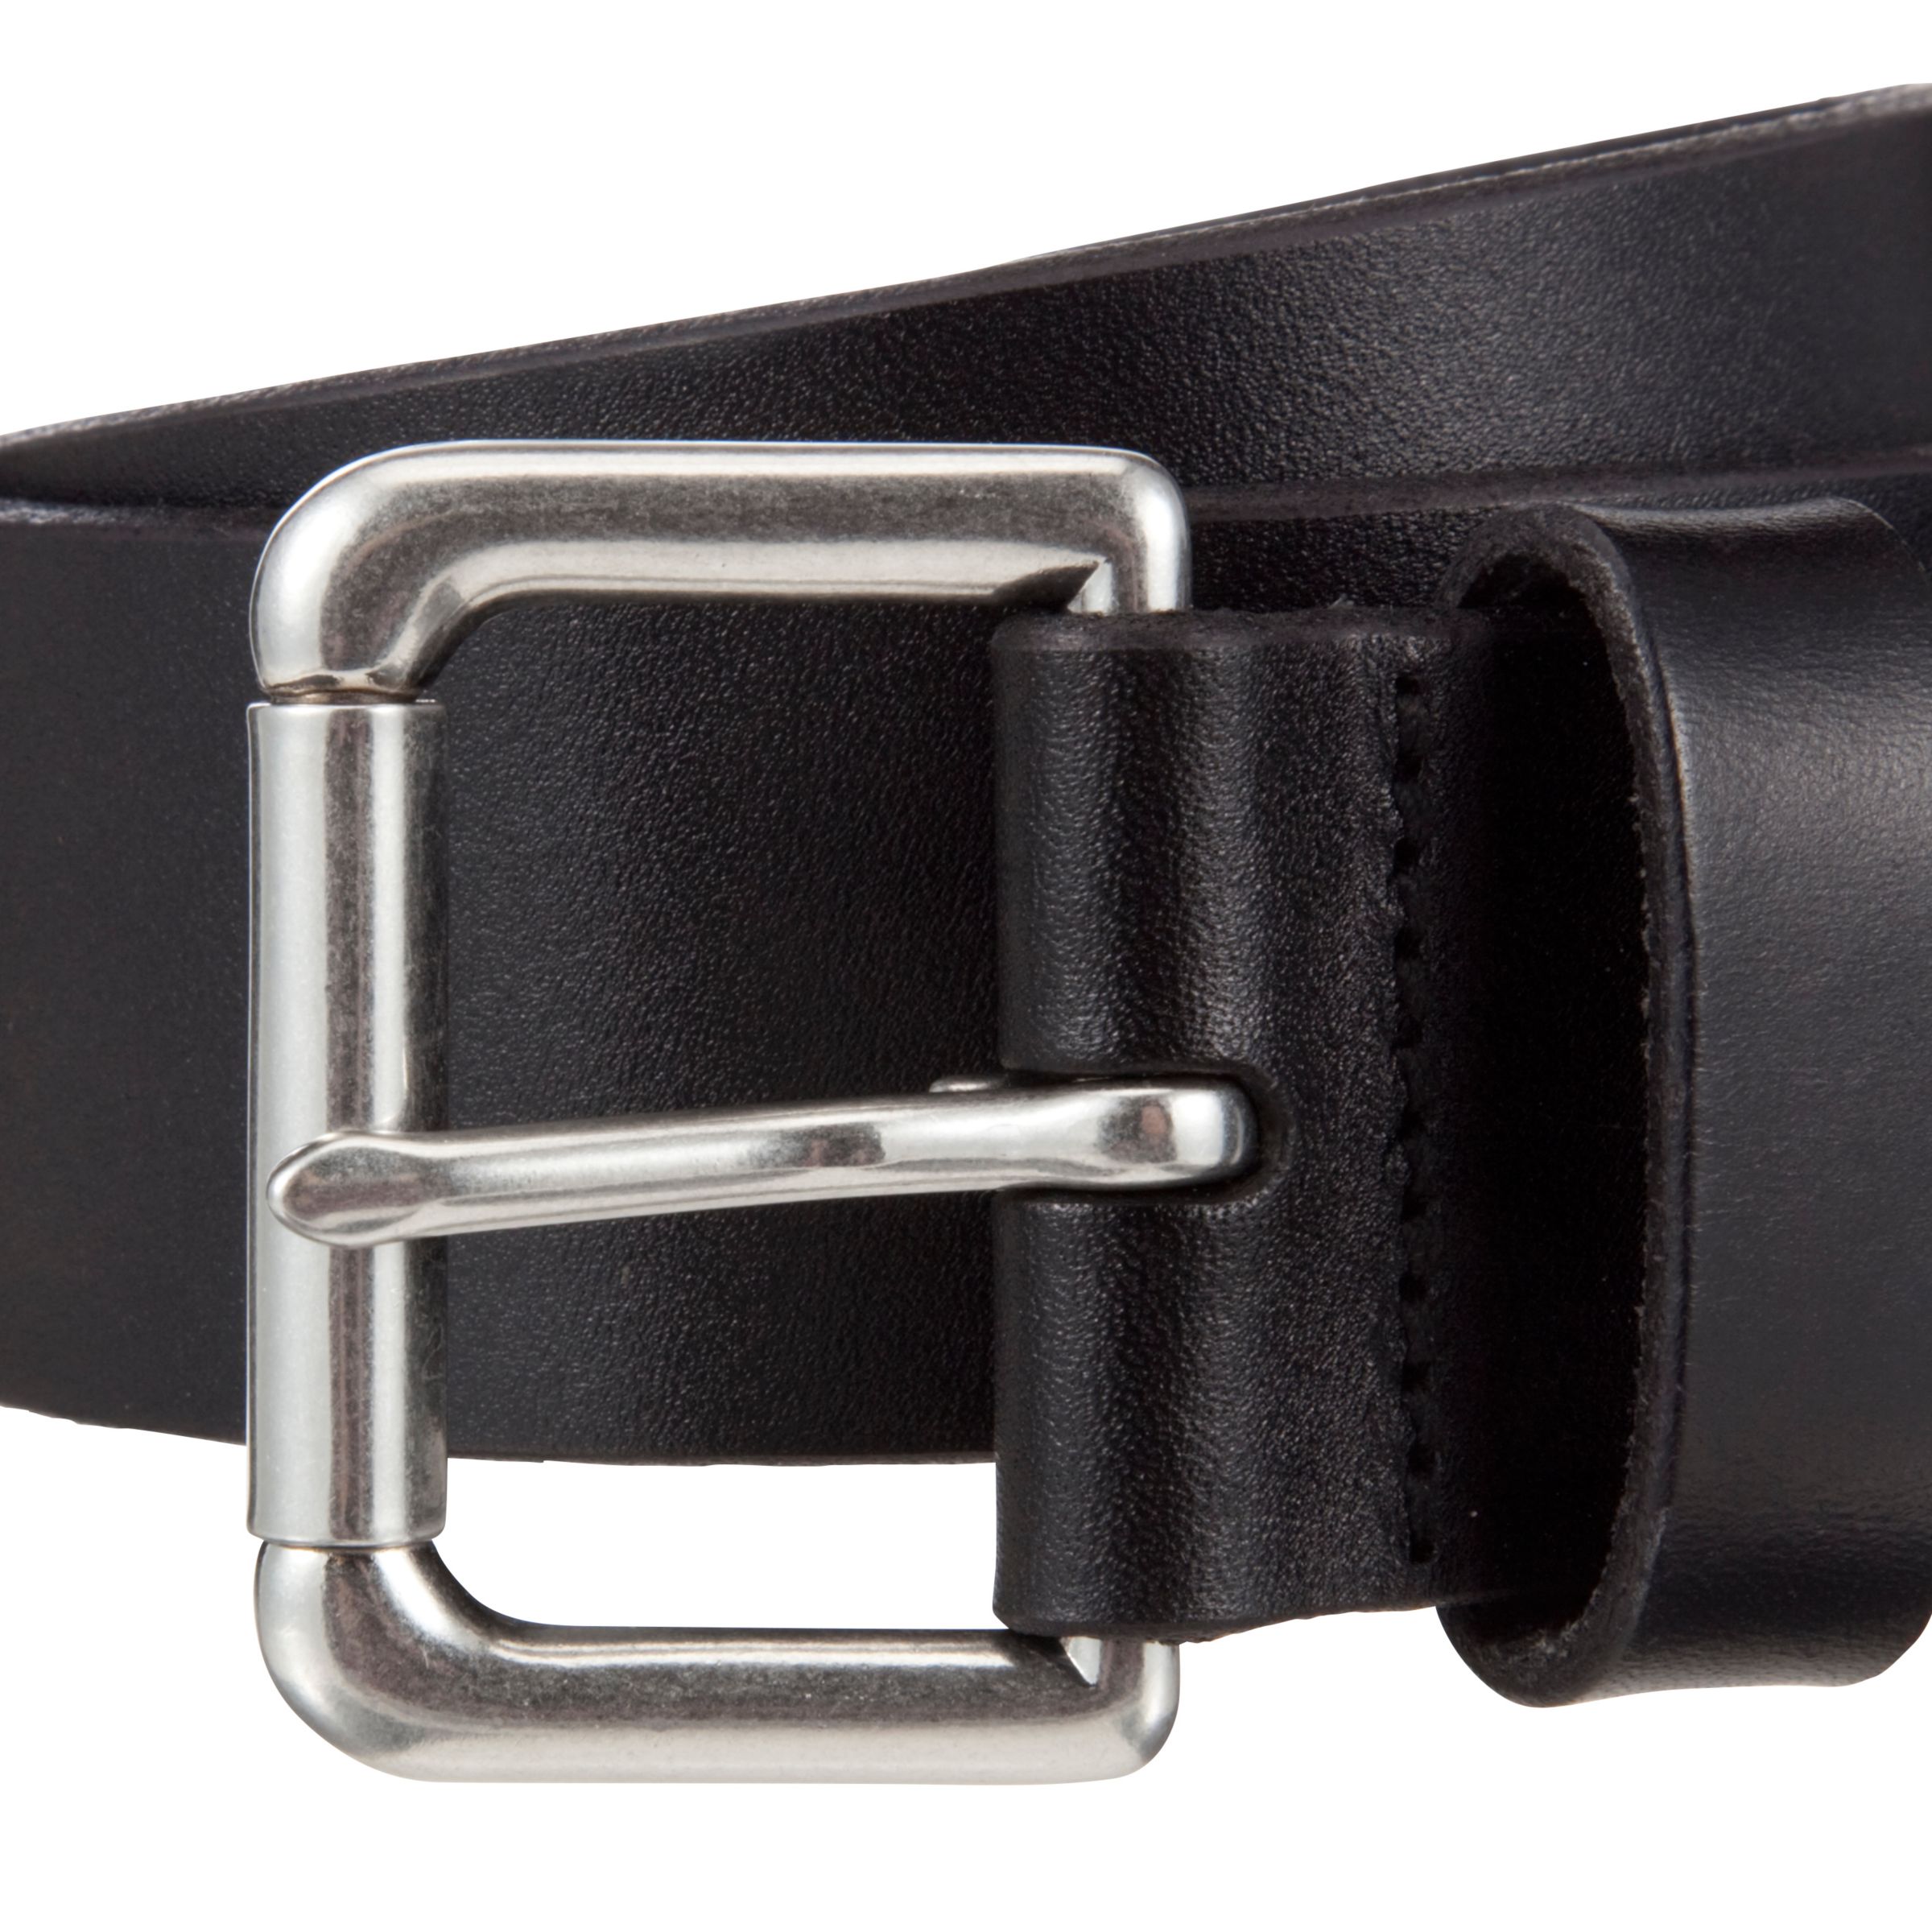 Polo Ralph Lauren Leather Roller Buckle Belt, Black, 32